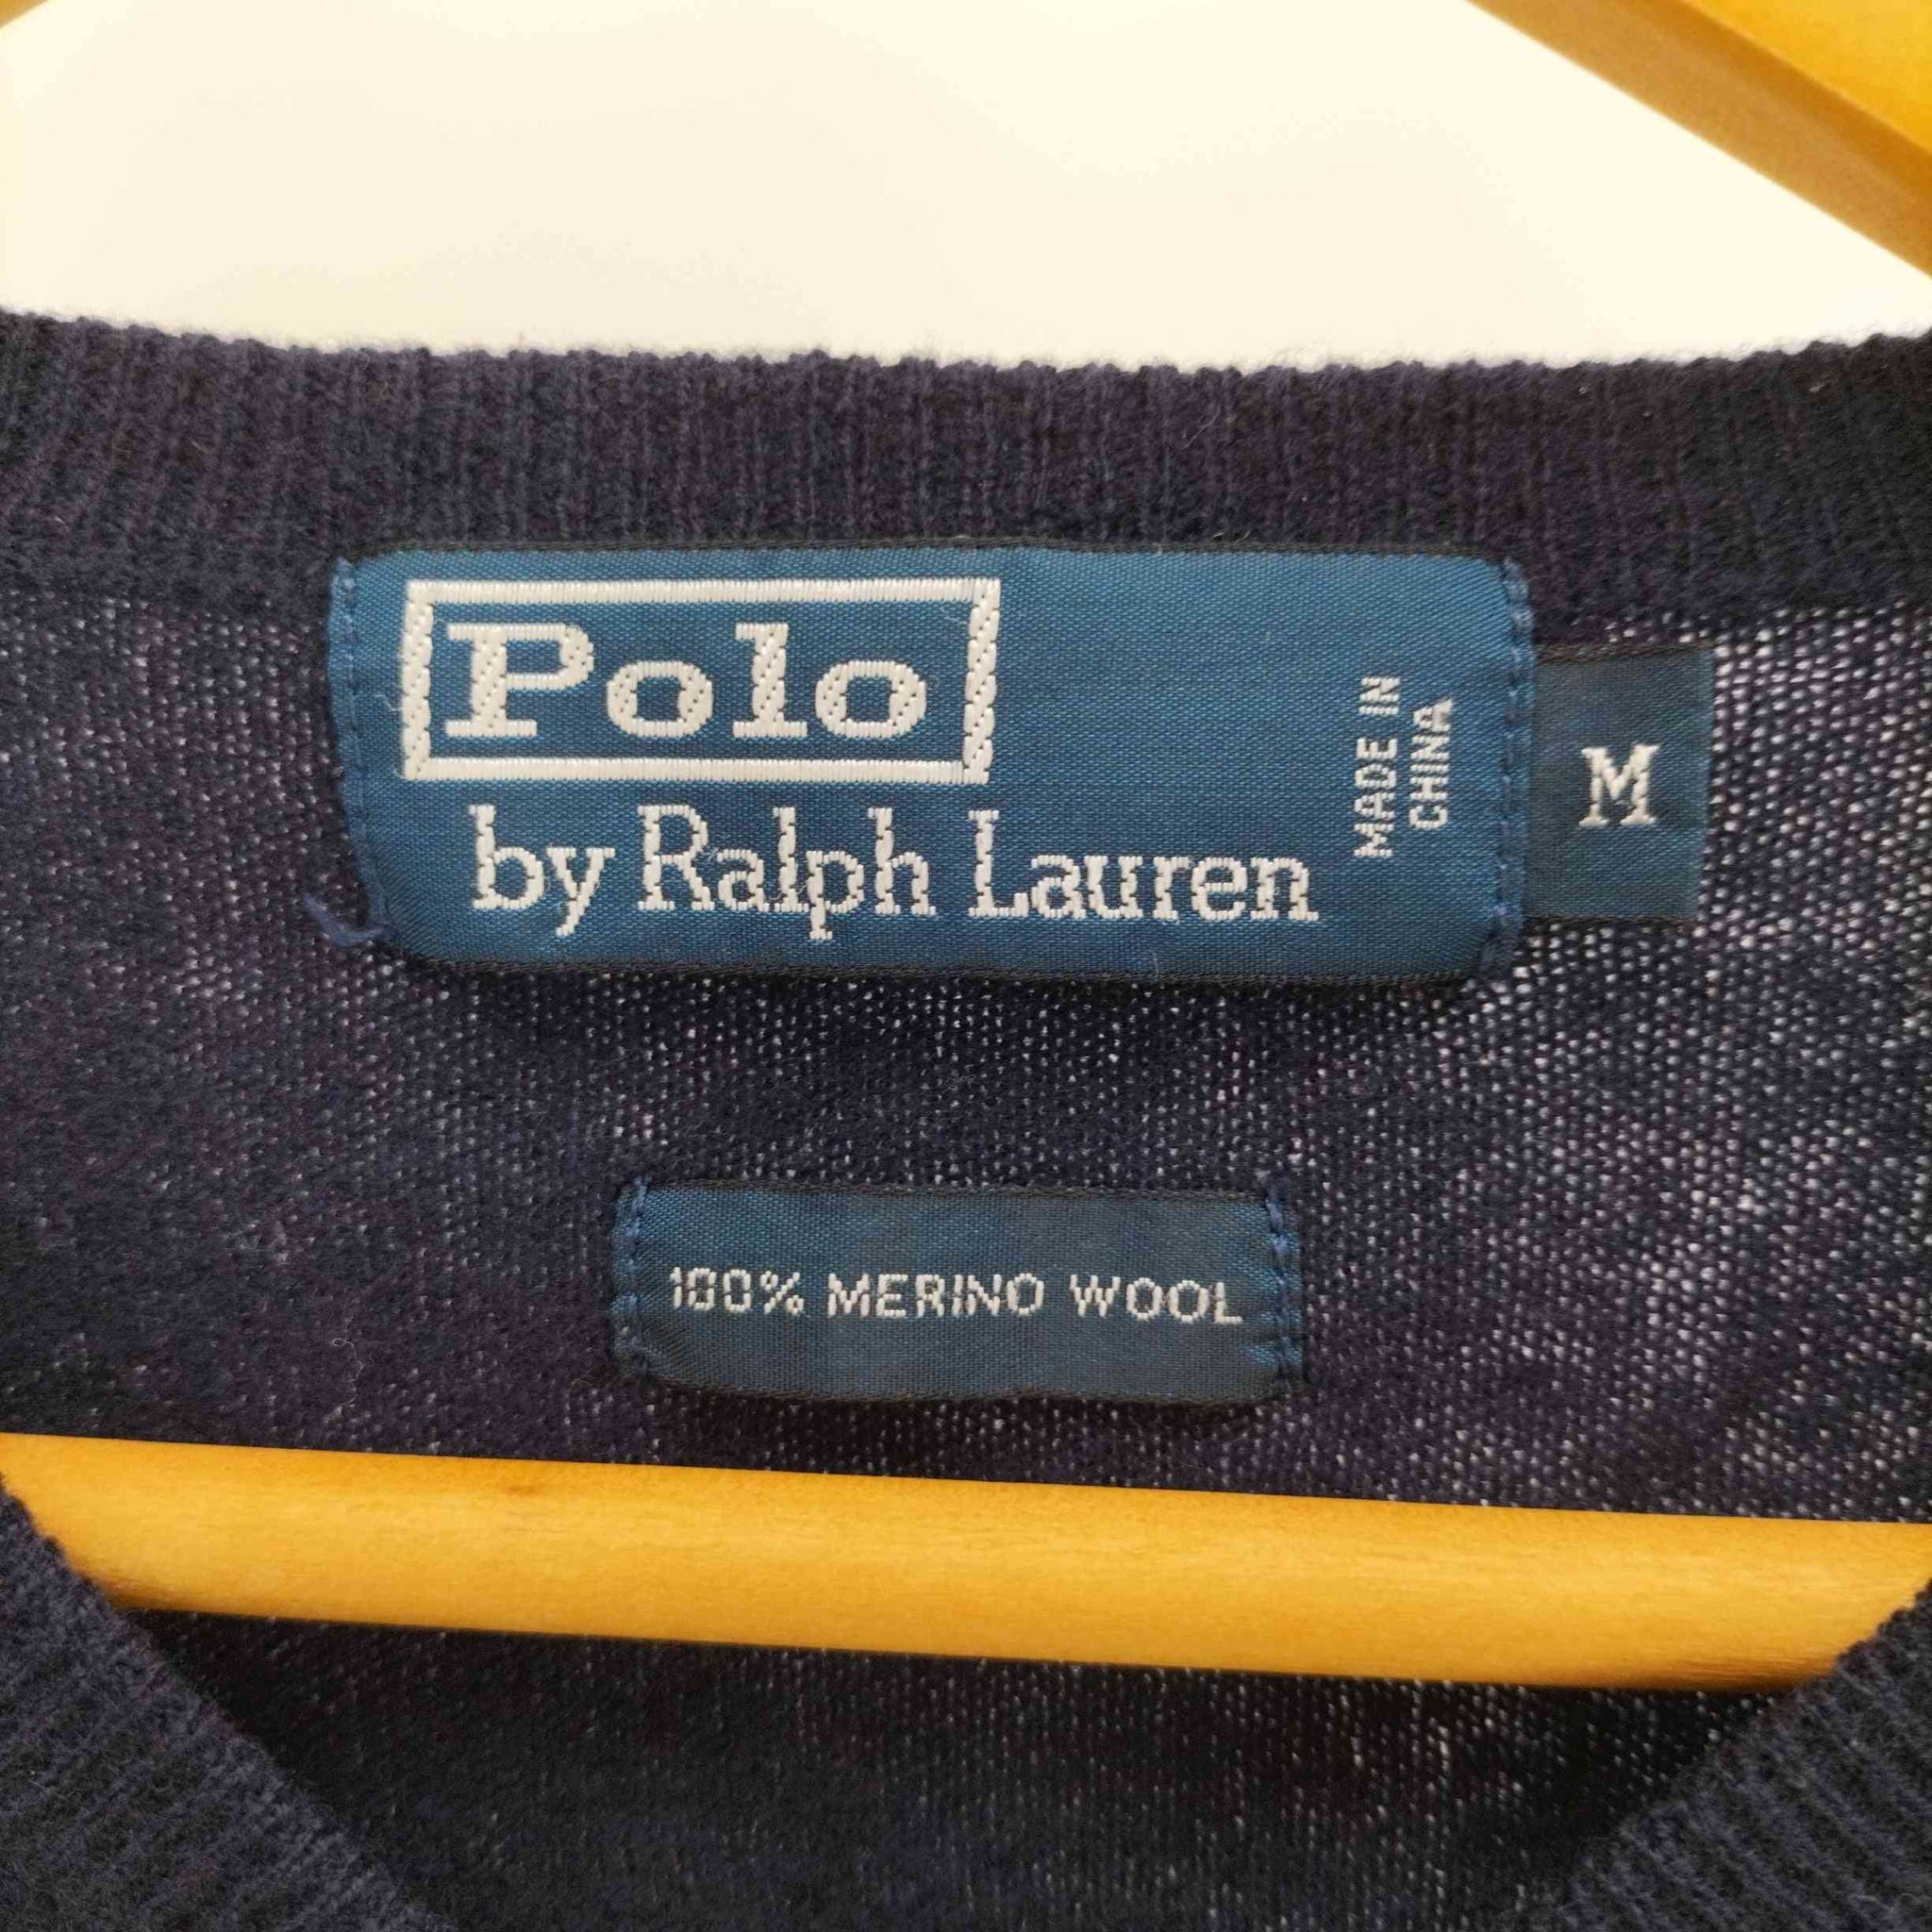 Polo by RALPH LAUREN(ポロバイラルフローレン)MERINO WOOL ポニー 刺繍 メリノ ウール Vネック ニット